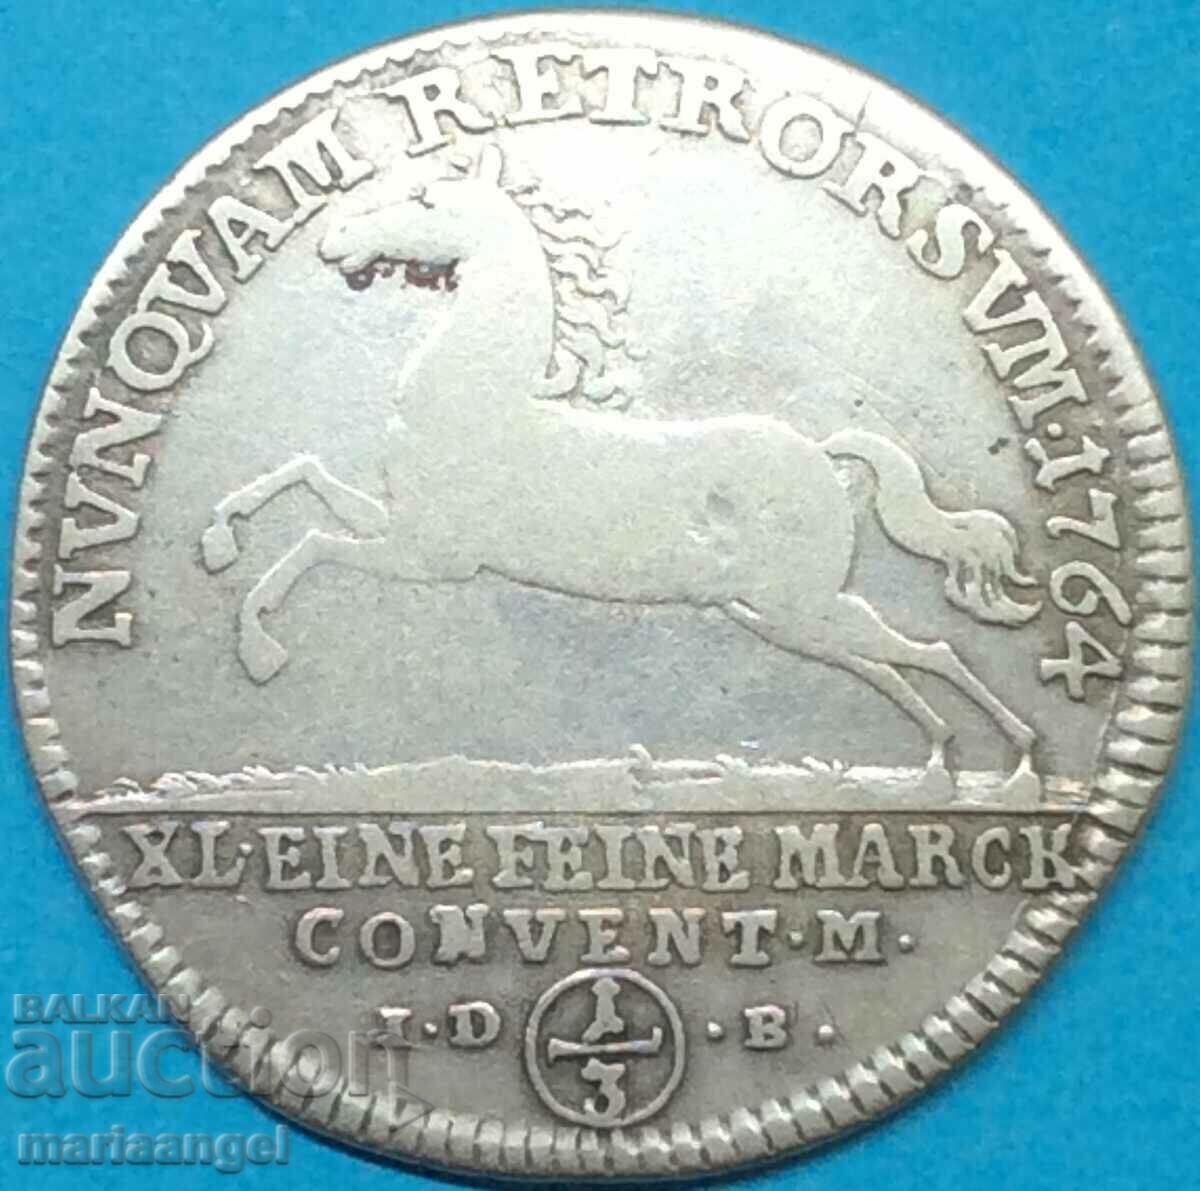 1/3 thaler 1764 Braunschweig and Lüneburg Karl I Germany silver